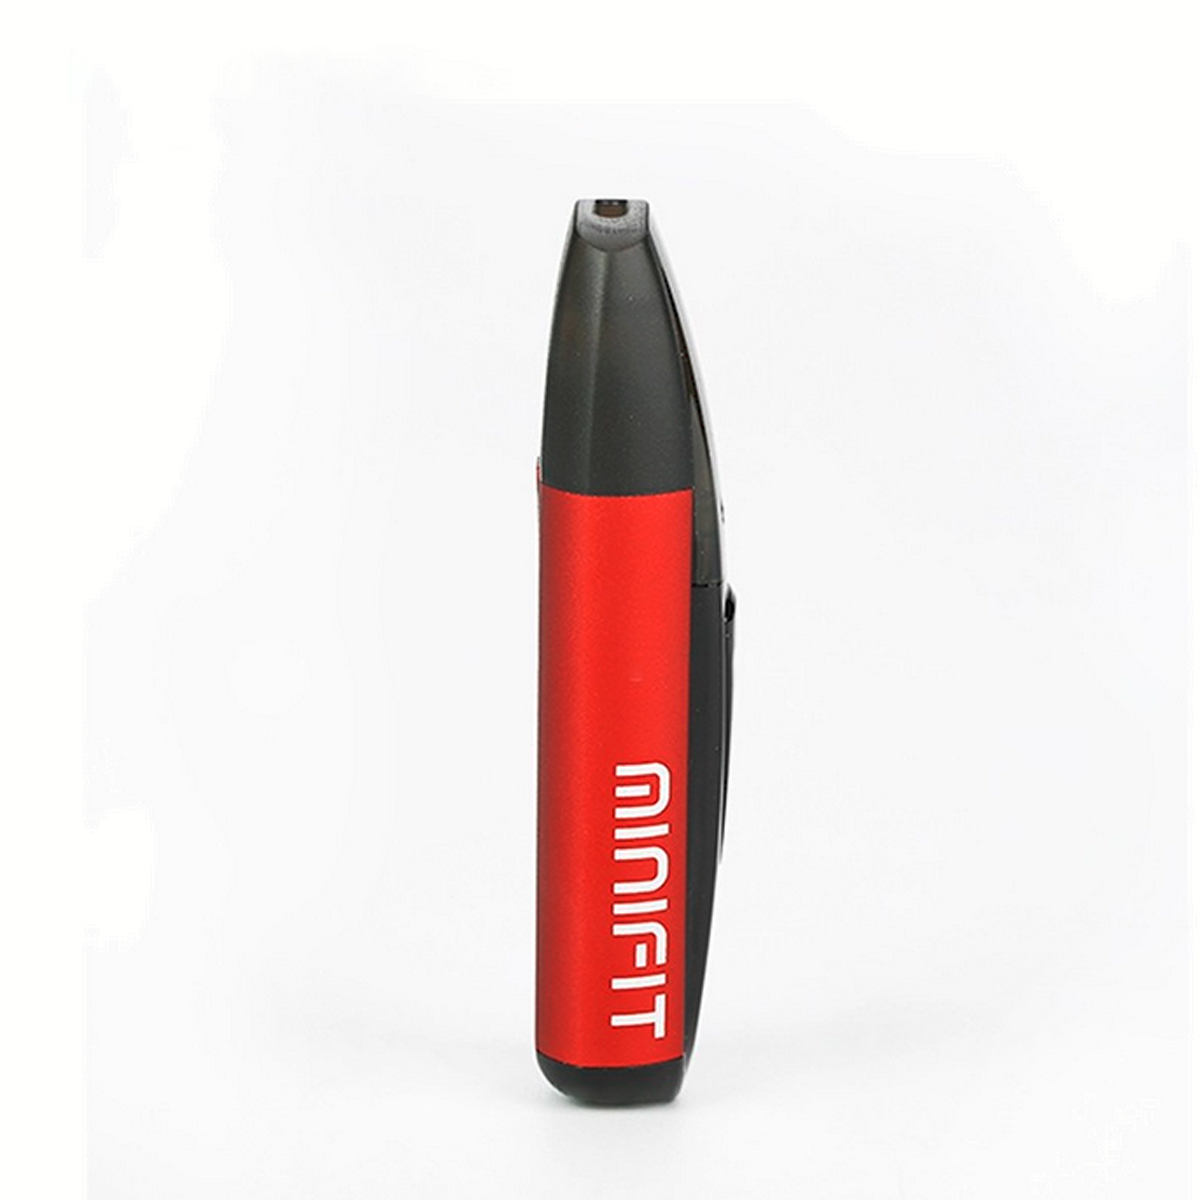 JUSTFOG Minifit Pod Kit (ブラック) 370mAh 1.5ml ポッド スターターキット ジャストフォグ ミニフィット 電子タバコ ベイプ mtl cbd vapeの画像3